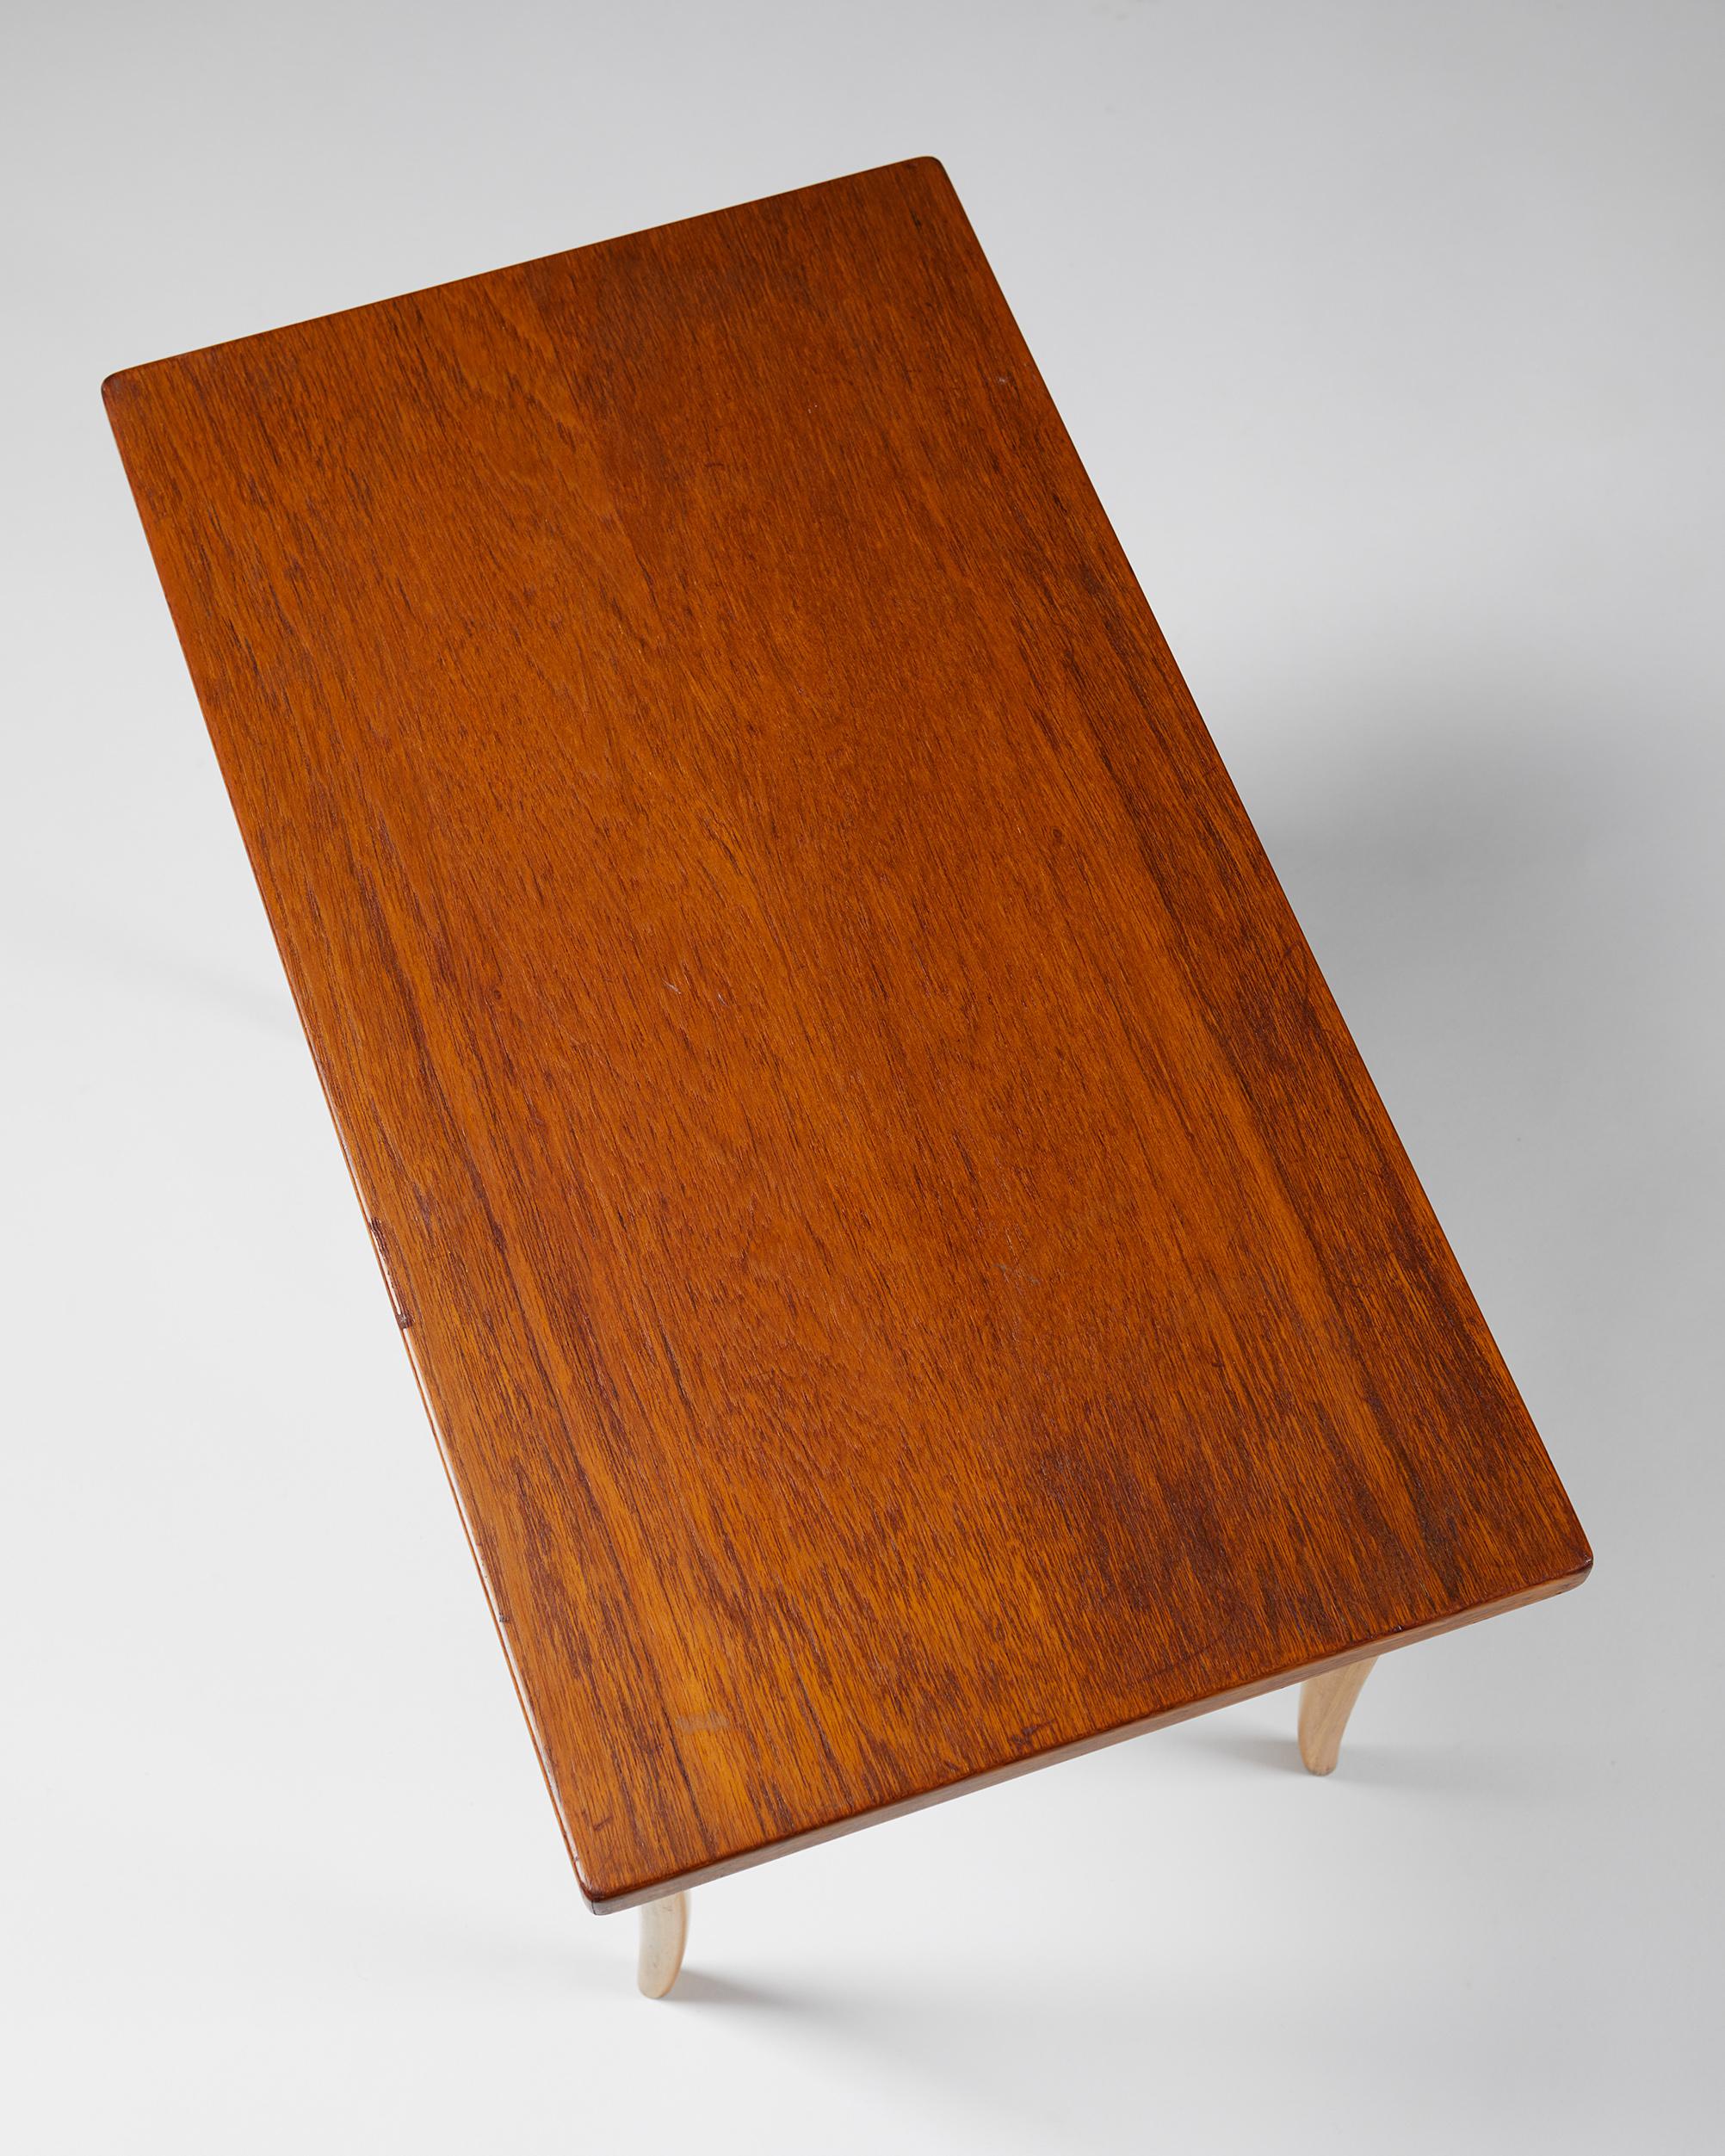 20th Century Table “Annika” Designed by Bruno Mathsson for Karl Mathsson, Sweden, 1950’s